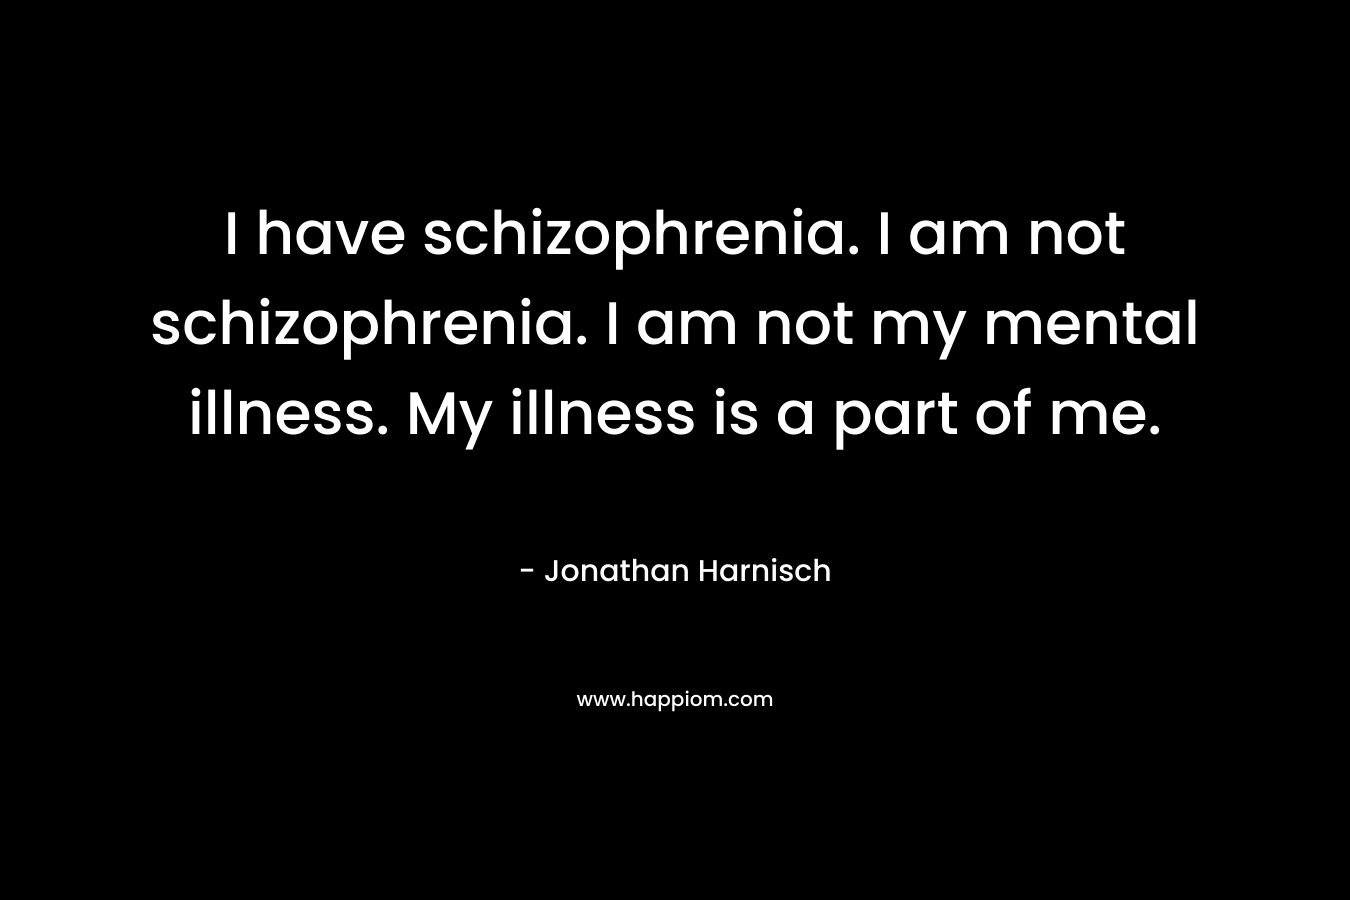 I have schizophrenia. I am not schizophrenia. I am not my mental illness. My illness is a part of me.